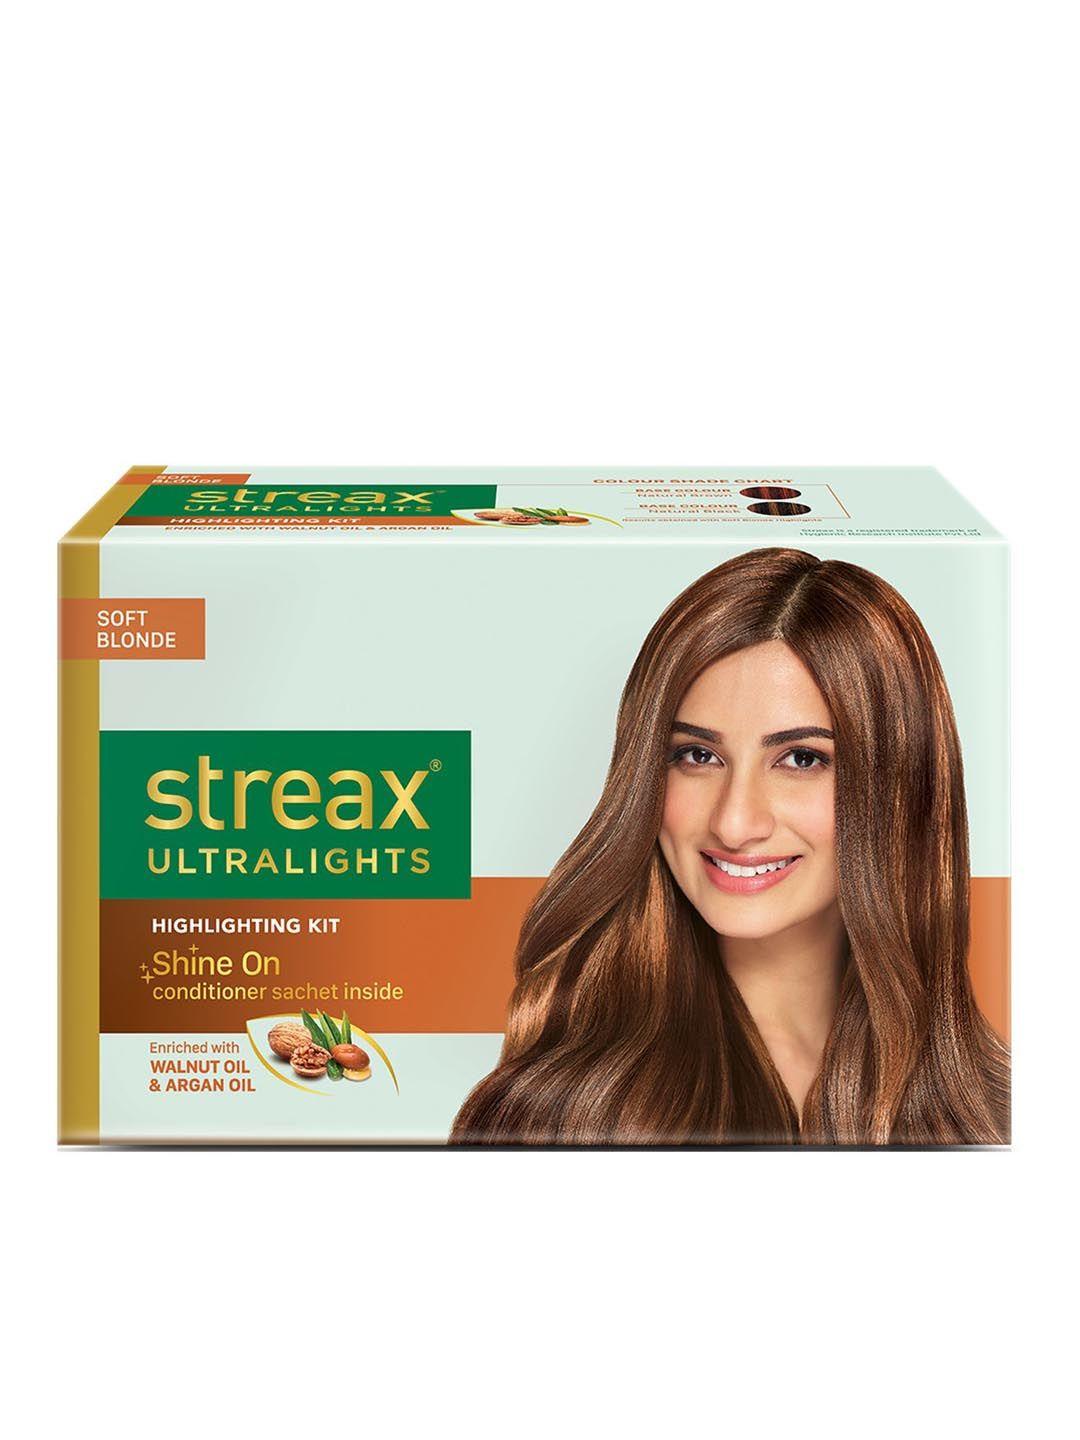 streax ultralights walnut oil & argan oil highlighting kit 40 ml - soft blonde